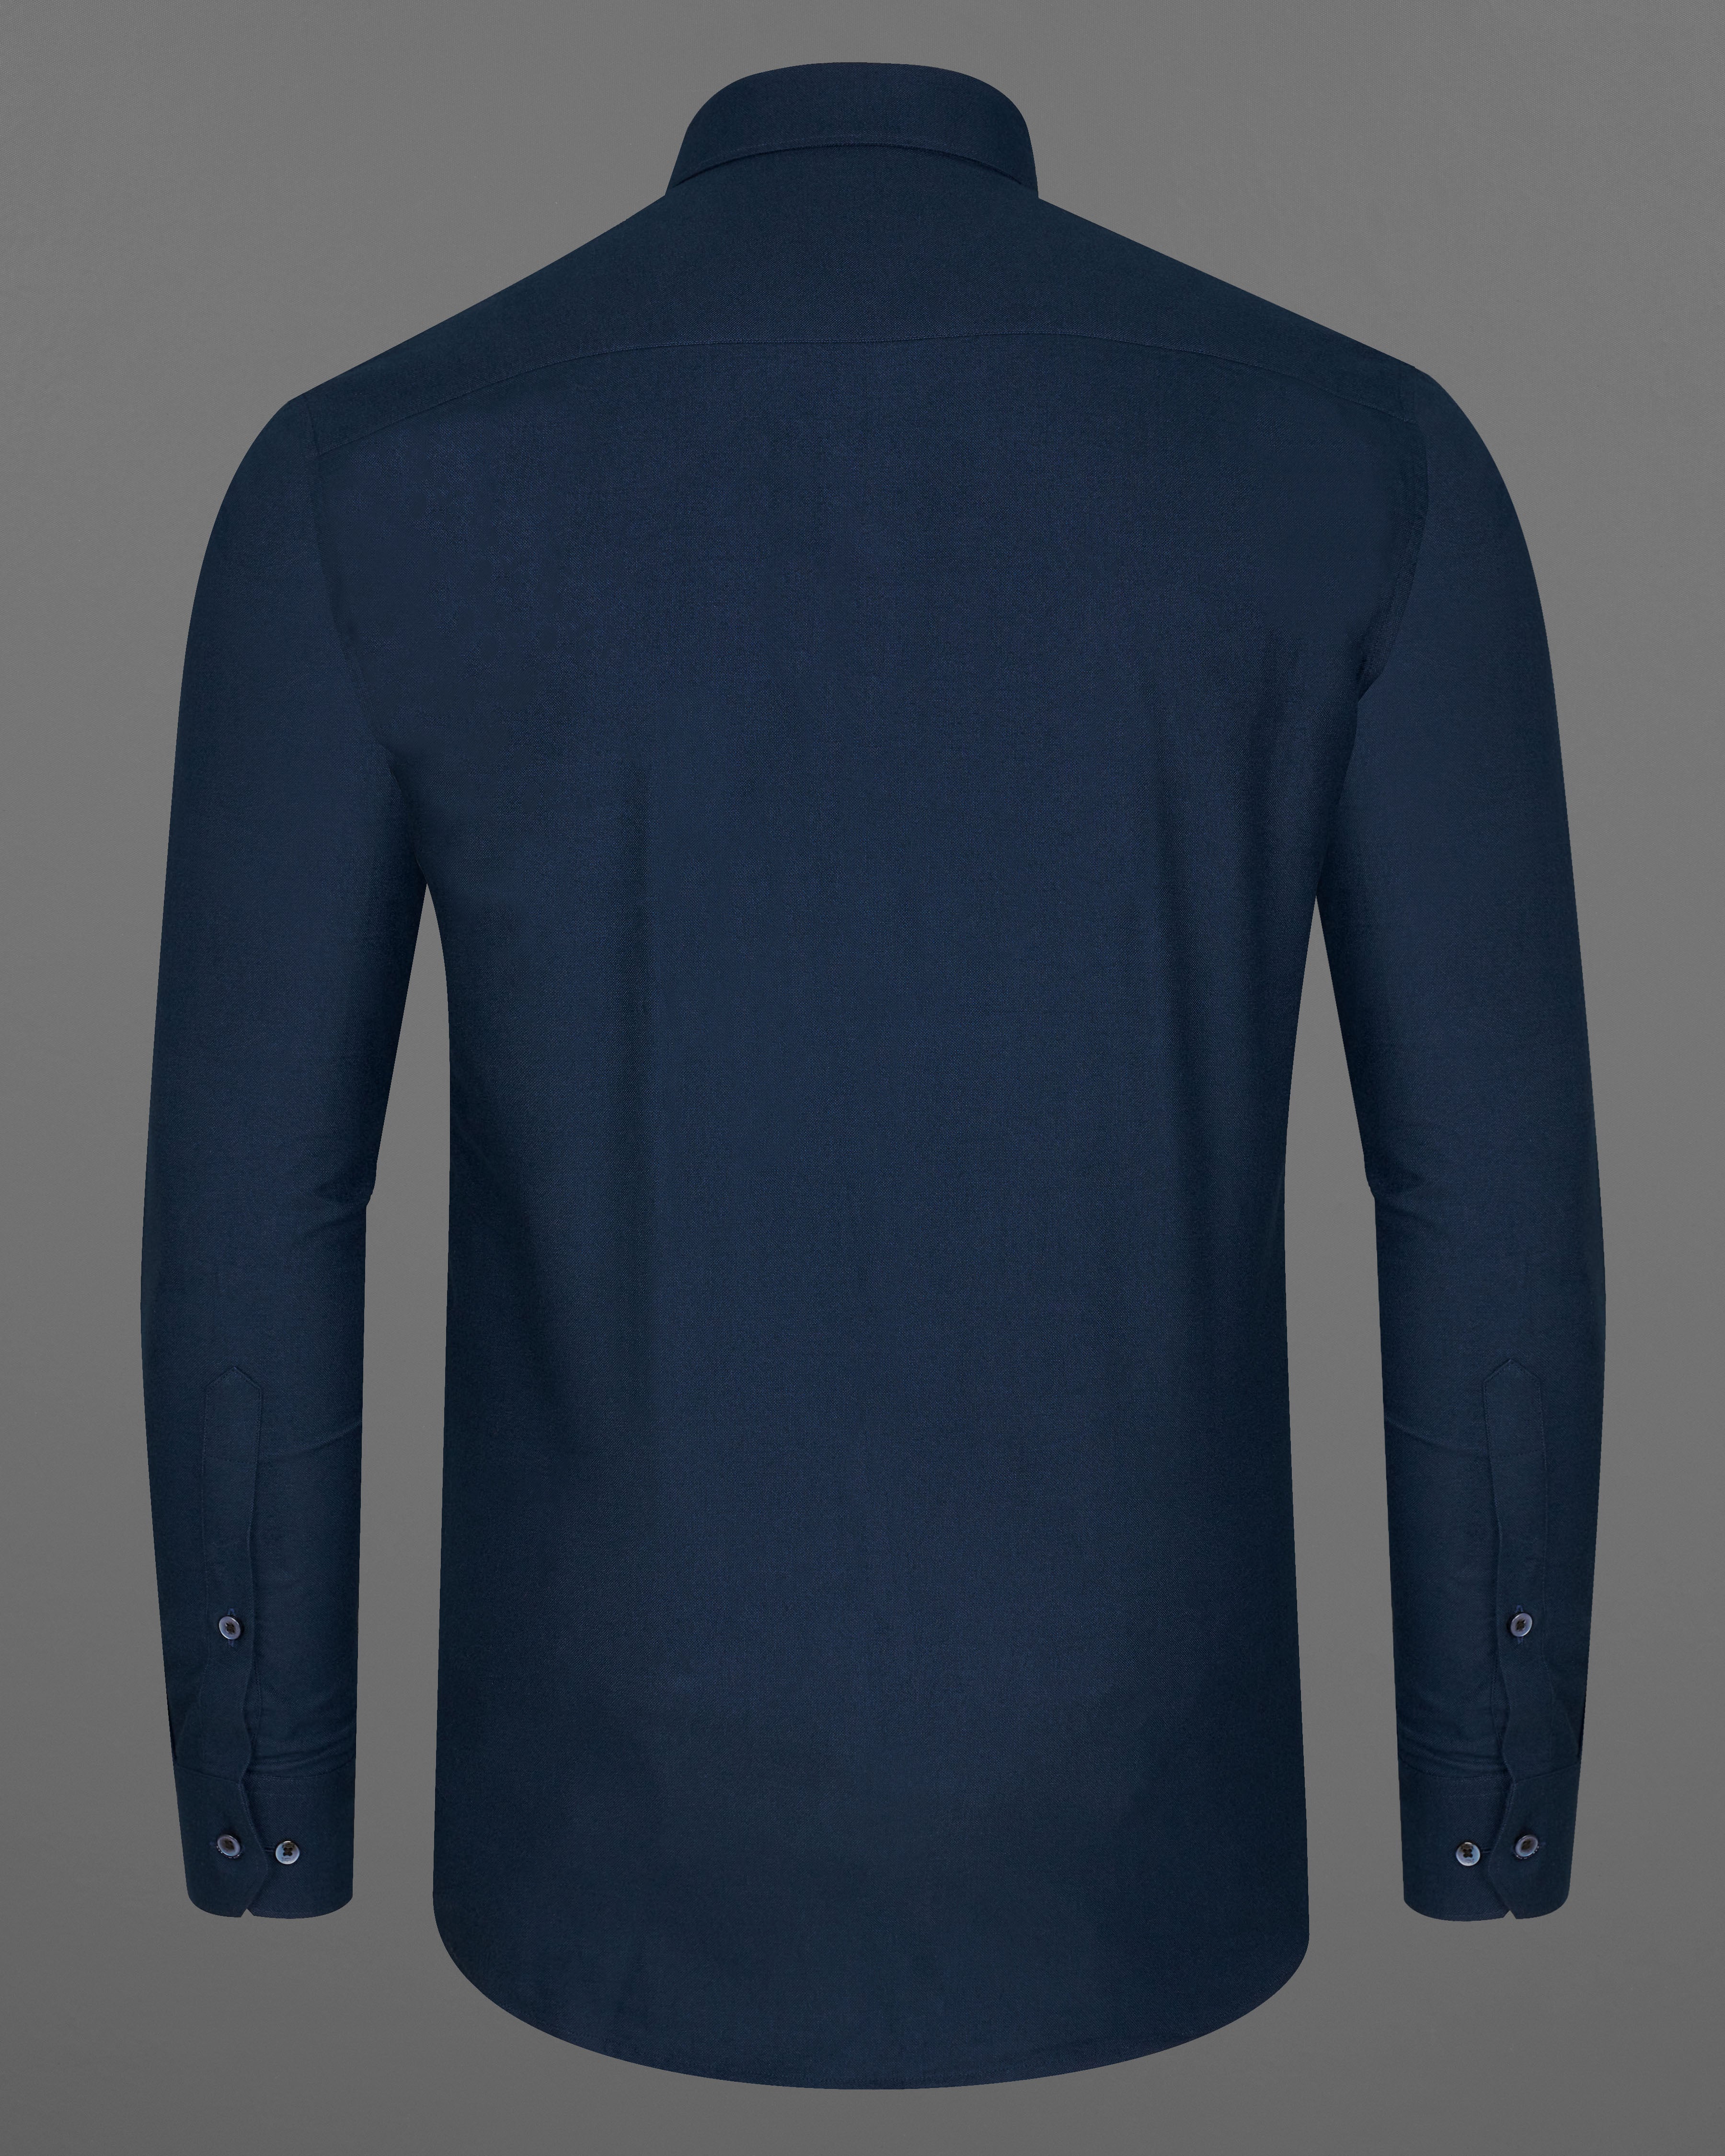 Firefly Navy Blue Royal Oxford Shirt